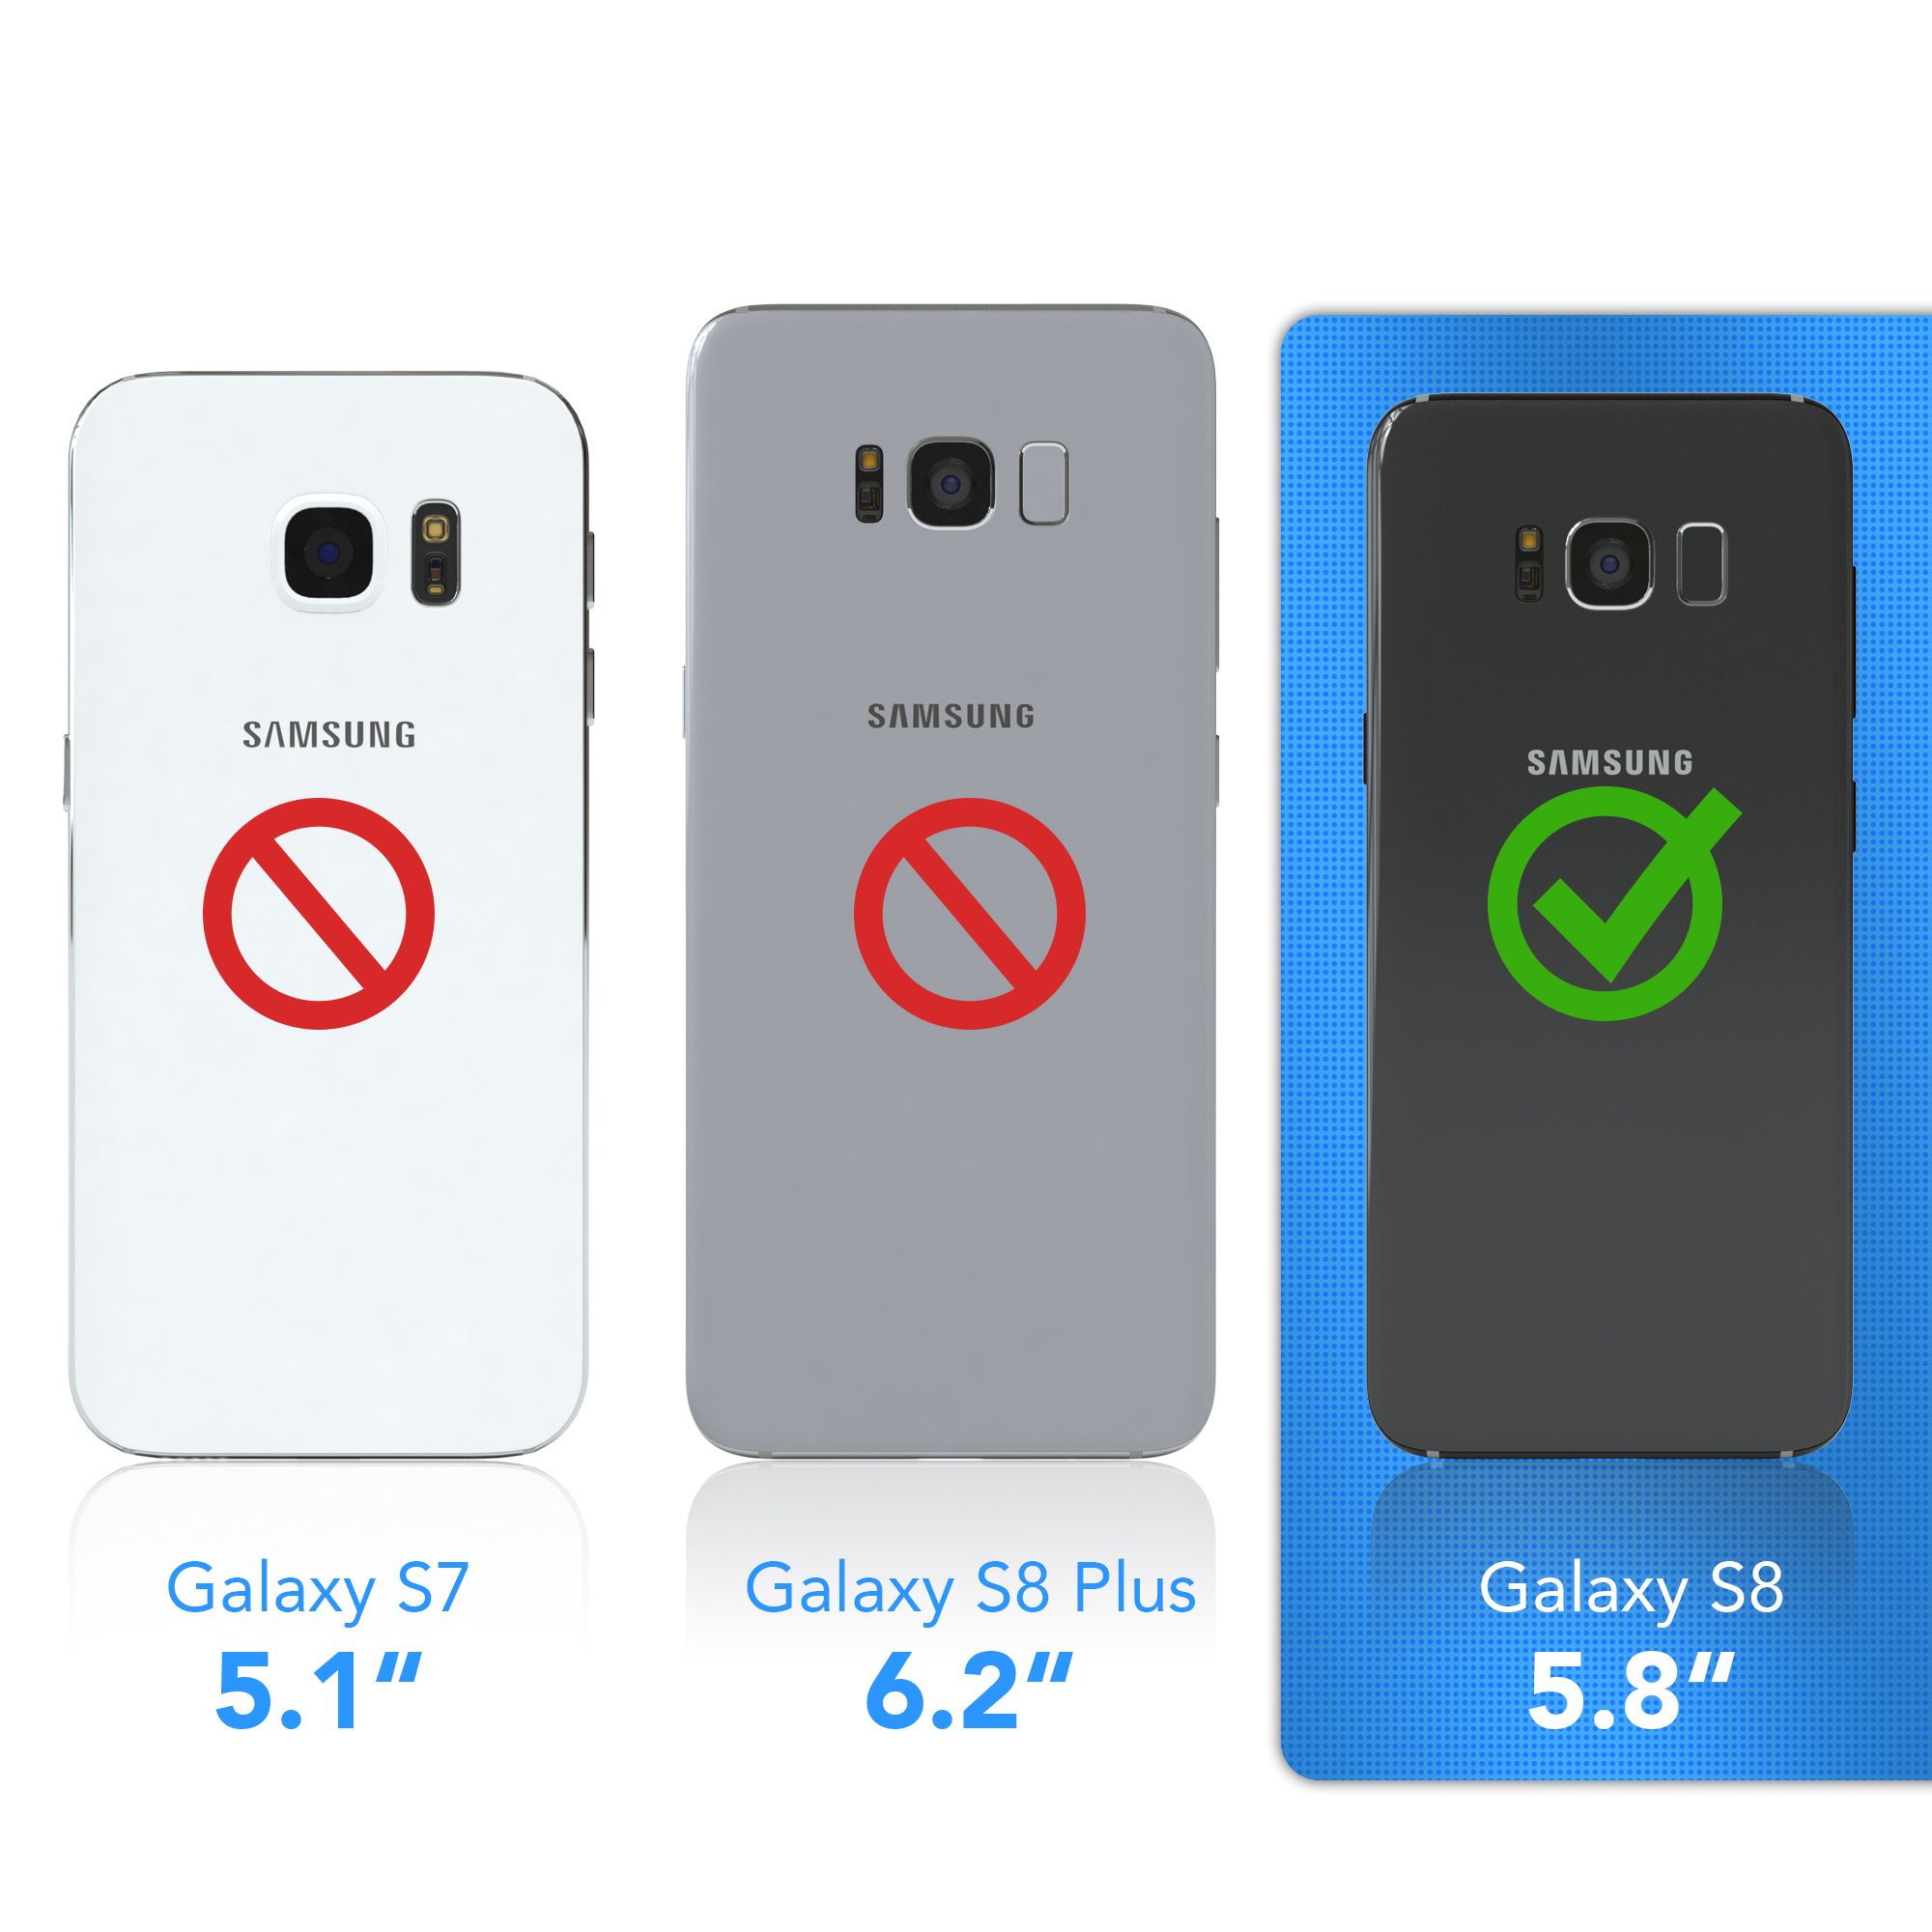 S8, CASE EAZY Samsung, Galaxy Rosa Glitzerhülle Flüssig, Backcover,